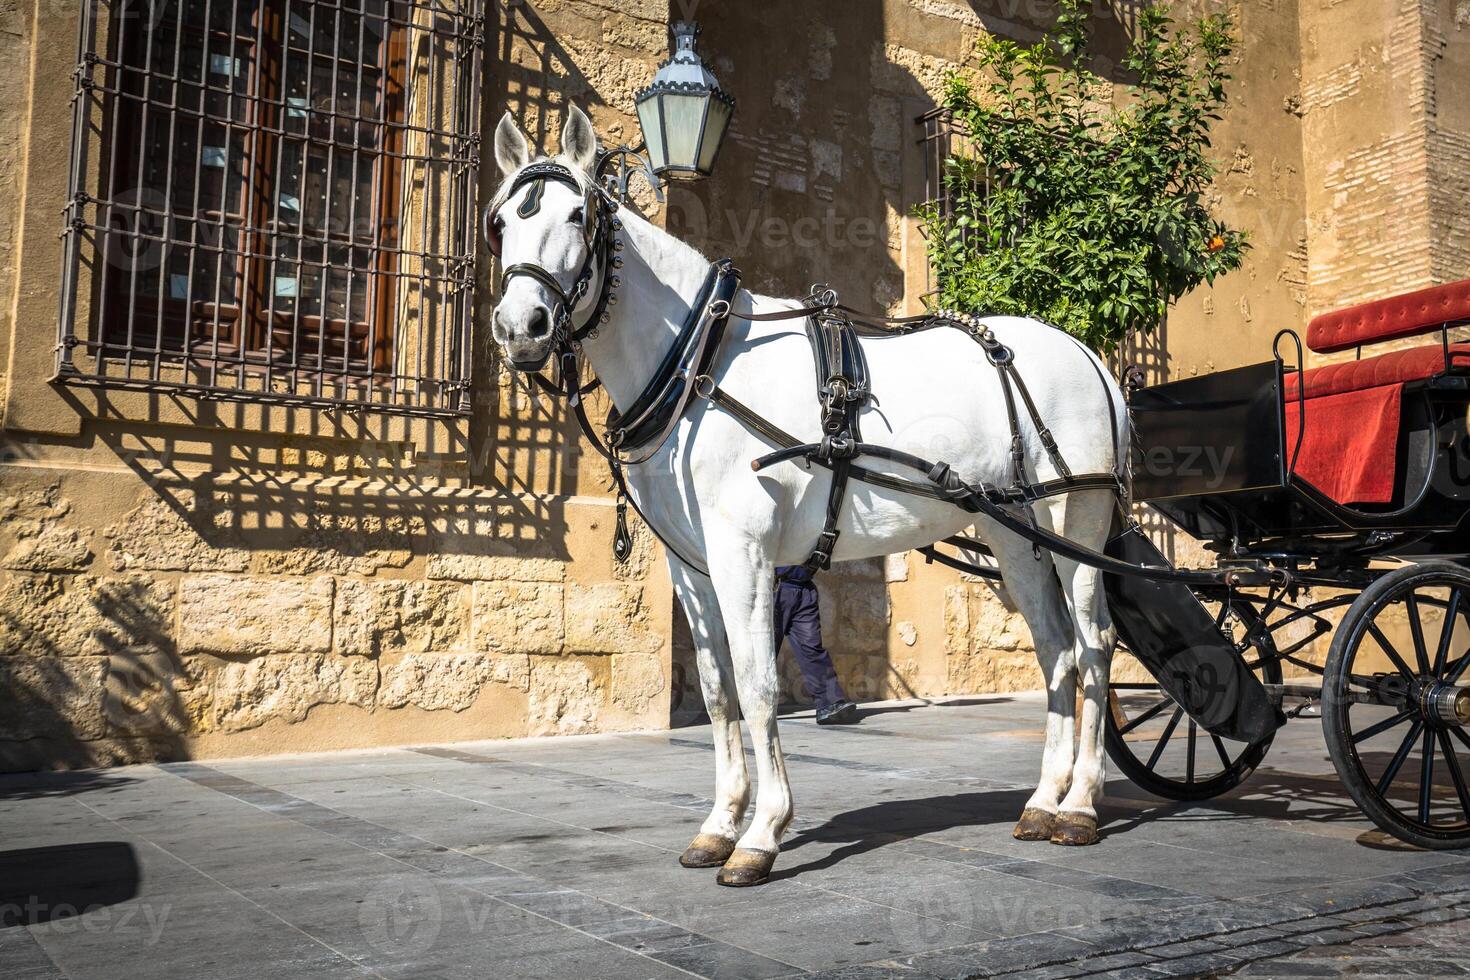 traditioneel paard en kar Bij Cordoba Spanje - reizen achtergrond foto